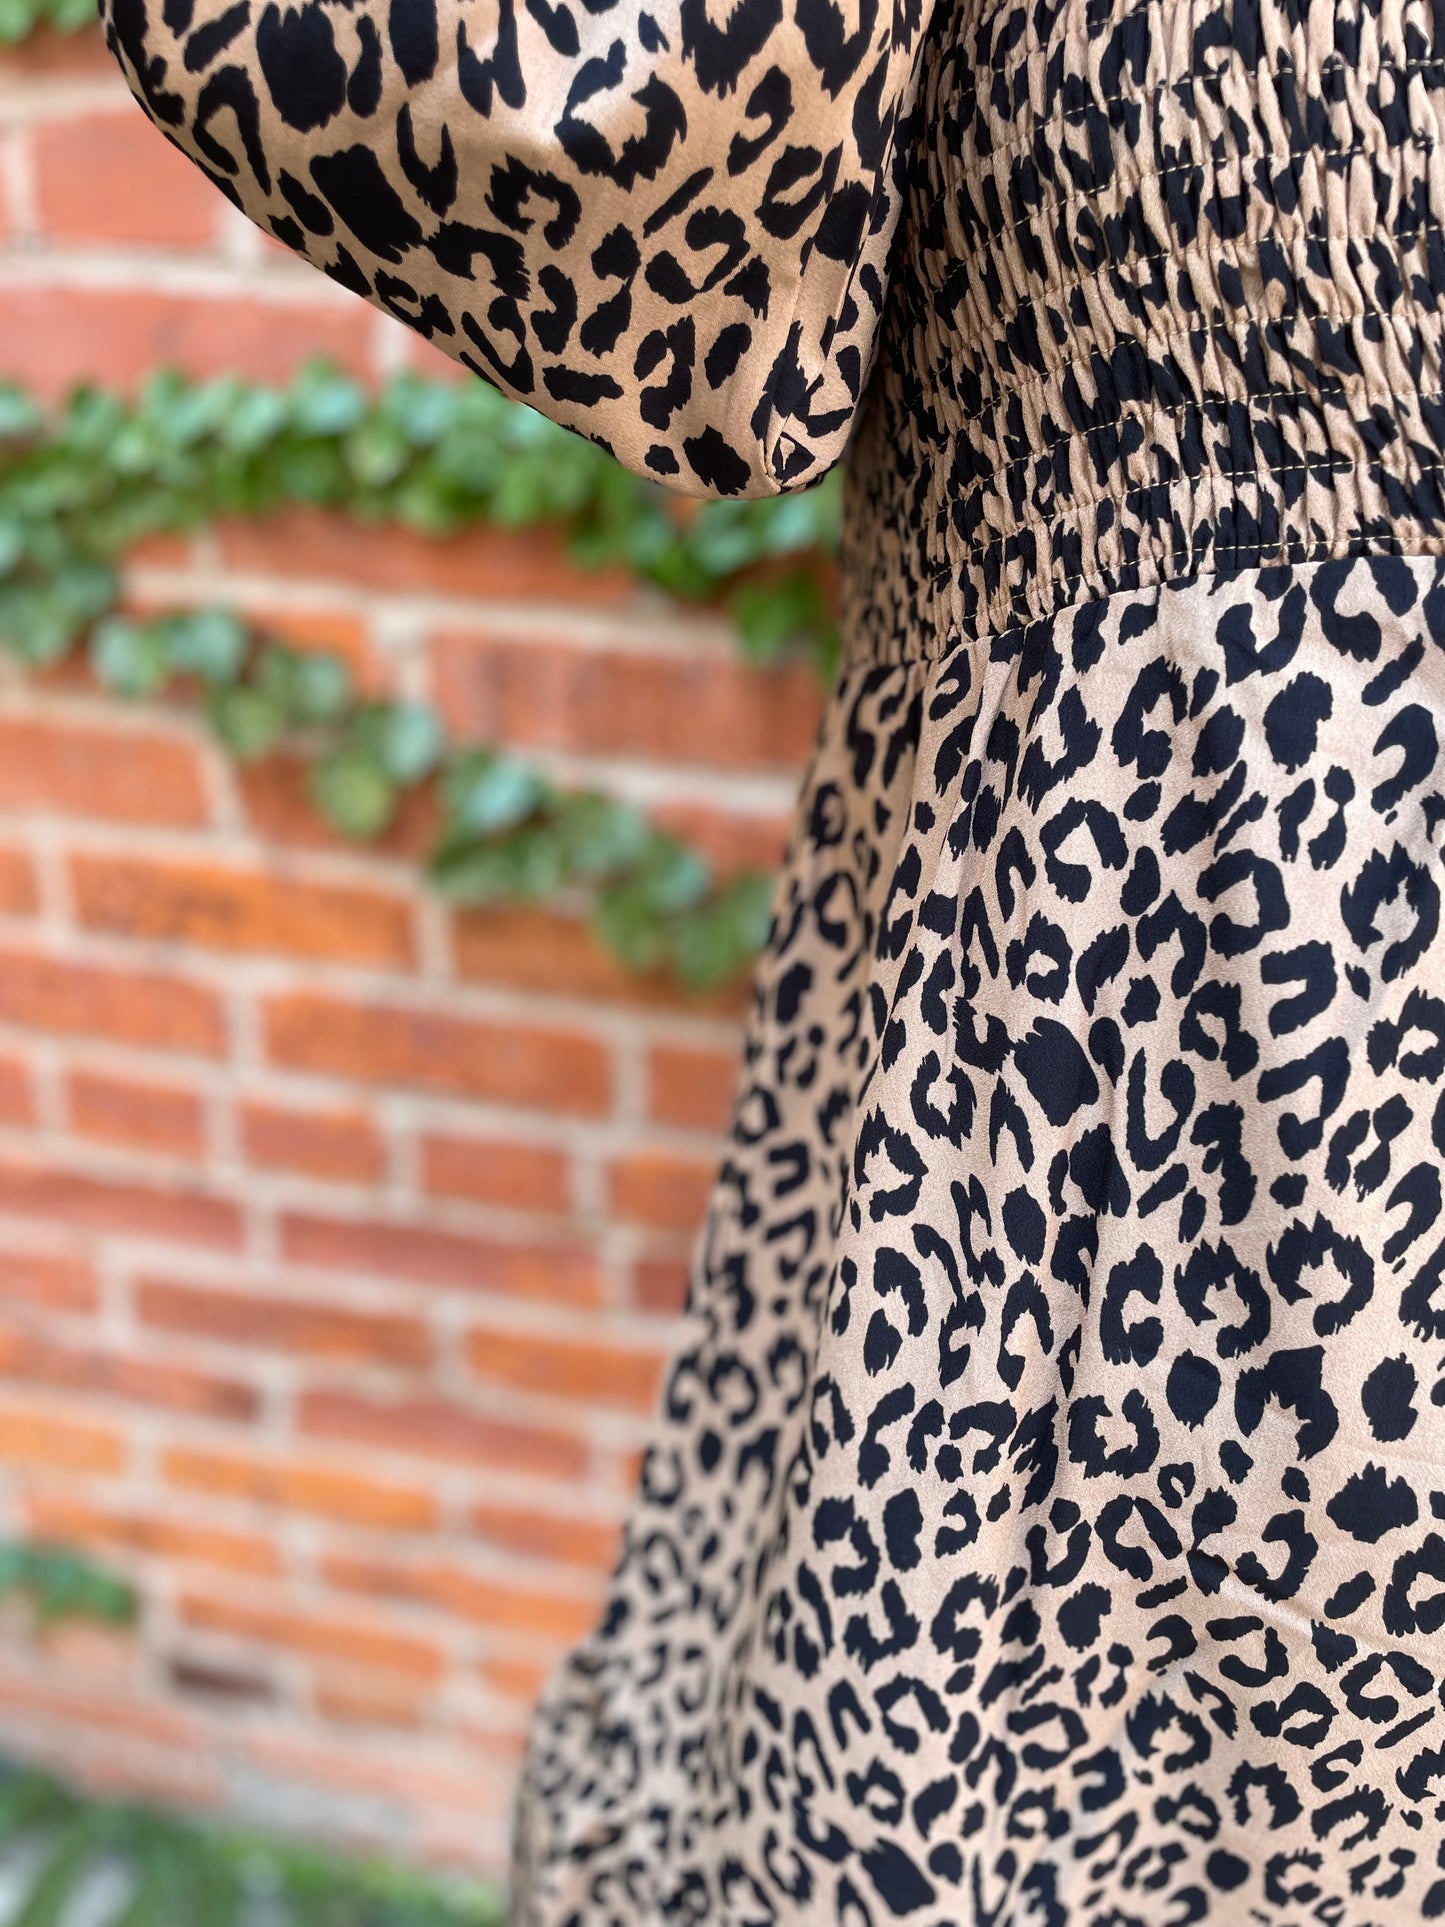 Leopard Love Dress